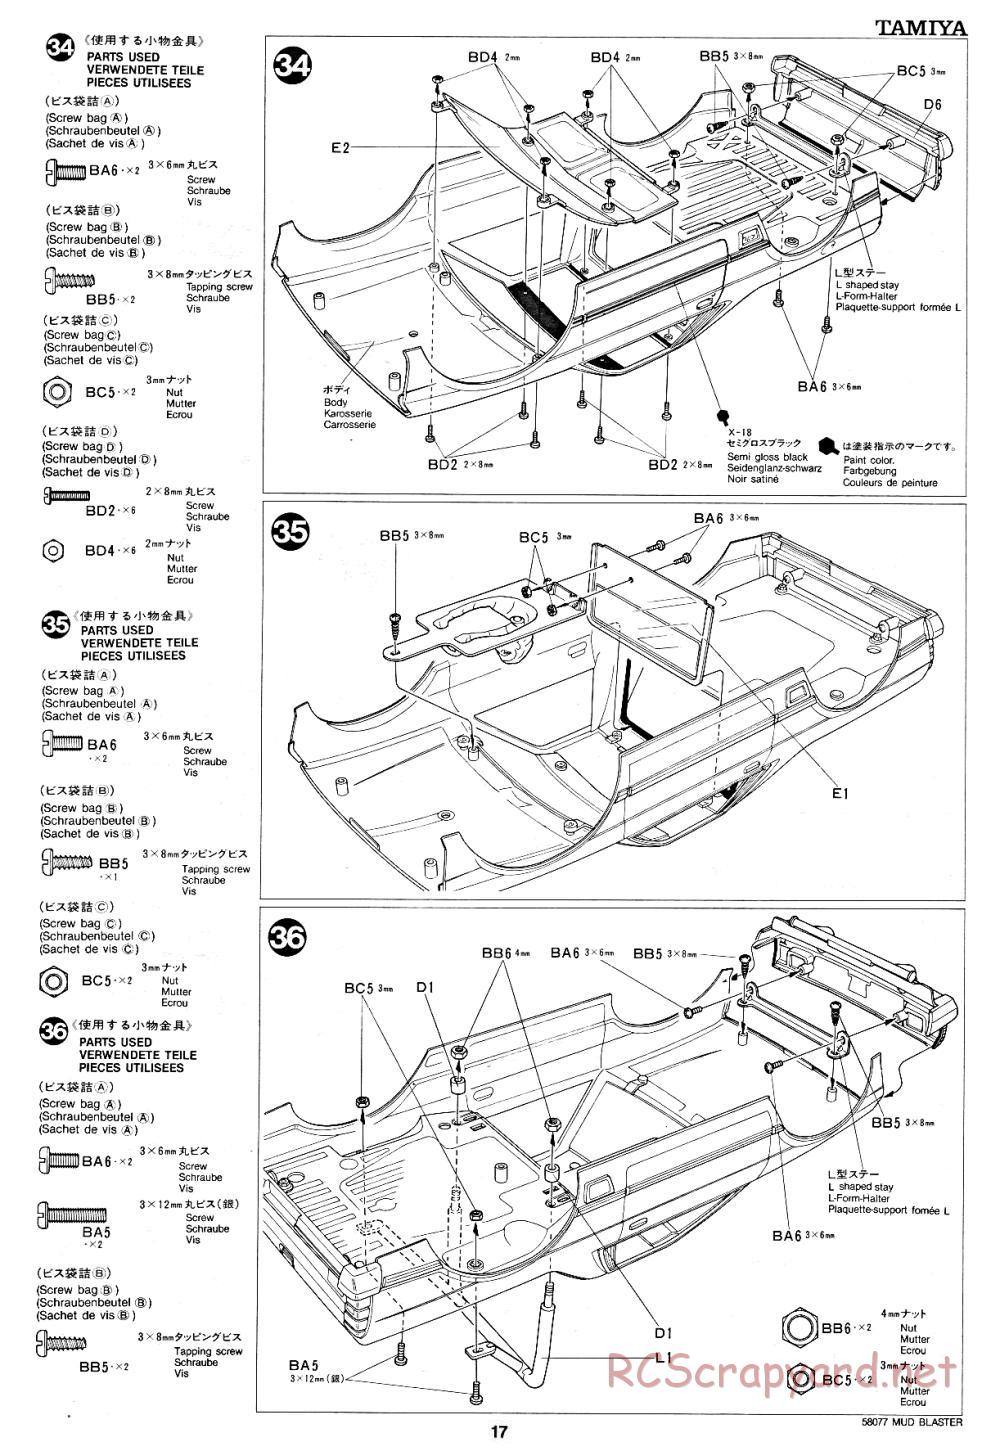 Tamiya - Mud Blaster - 58077 - Manual - Page 17